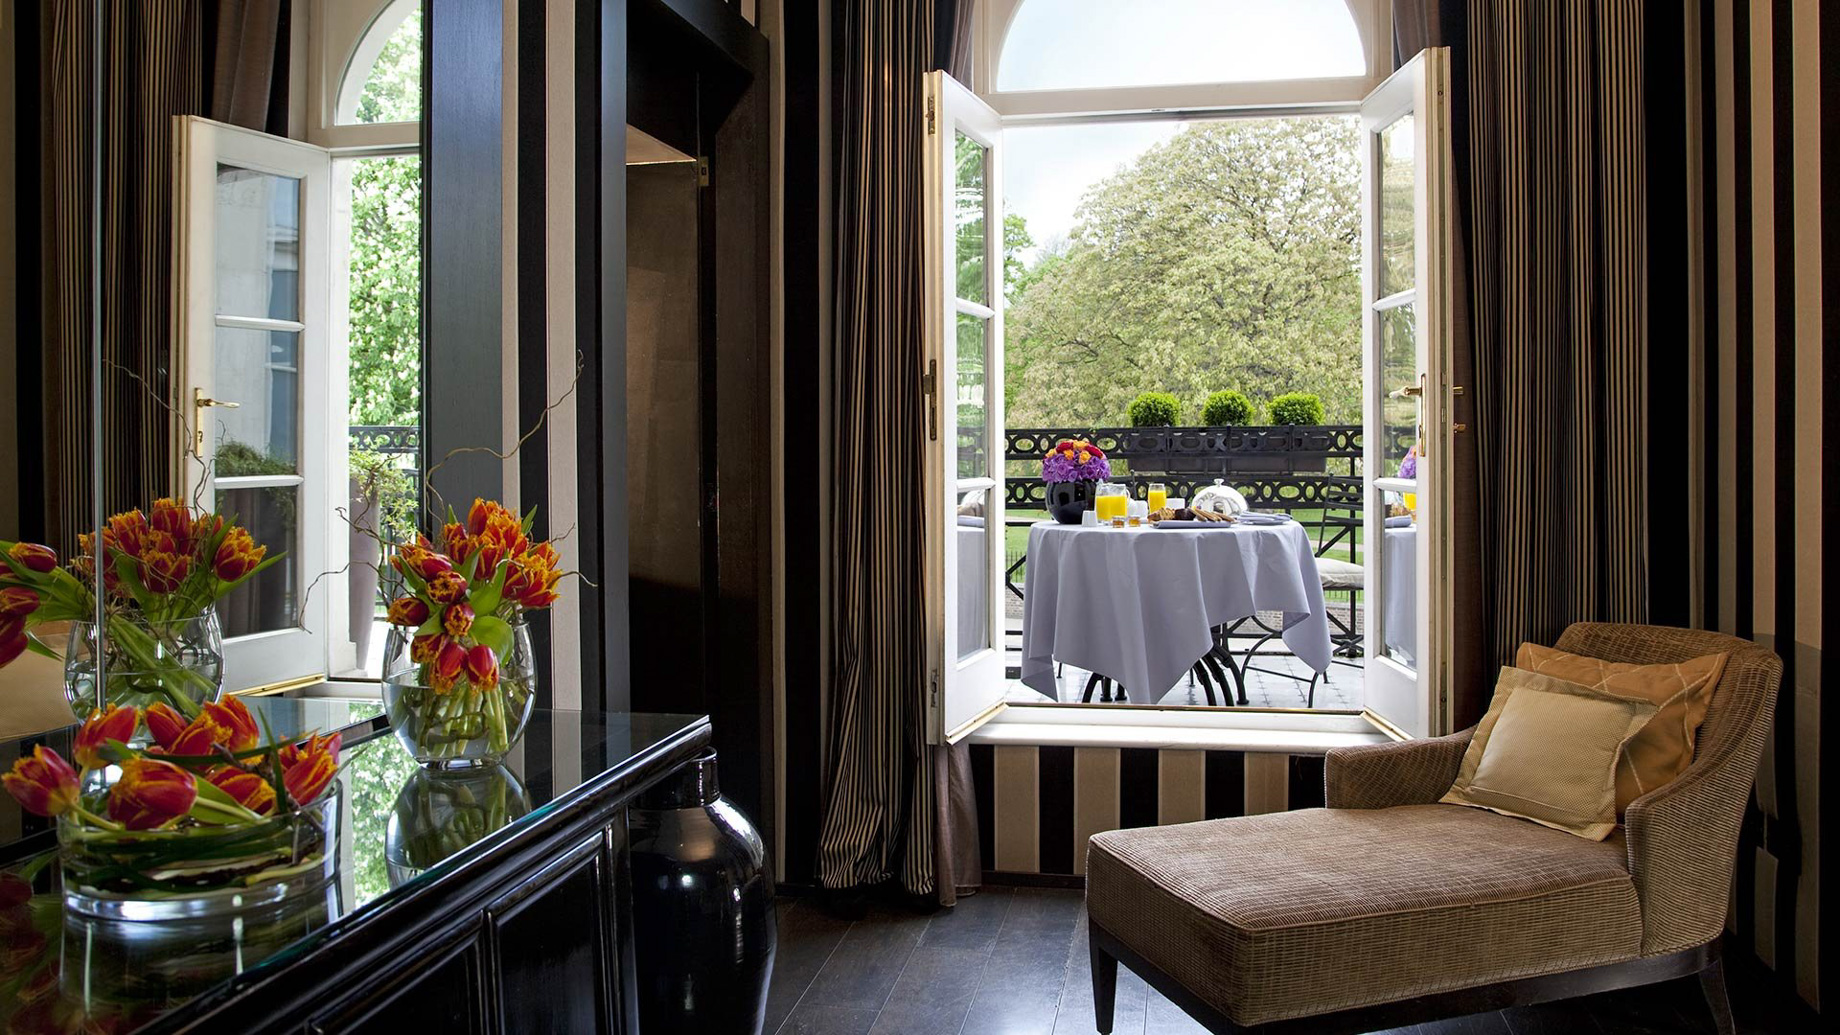 Baglioni Hotel London – South Kensington, London, United Kingdom – Royal Suite